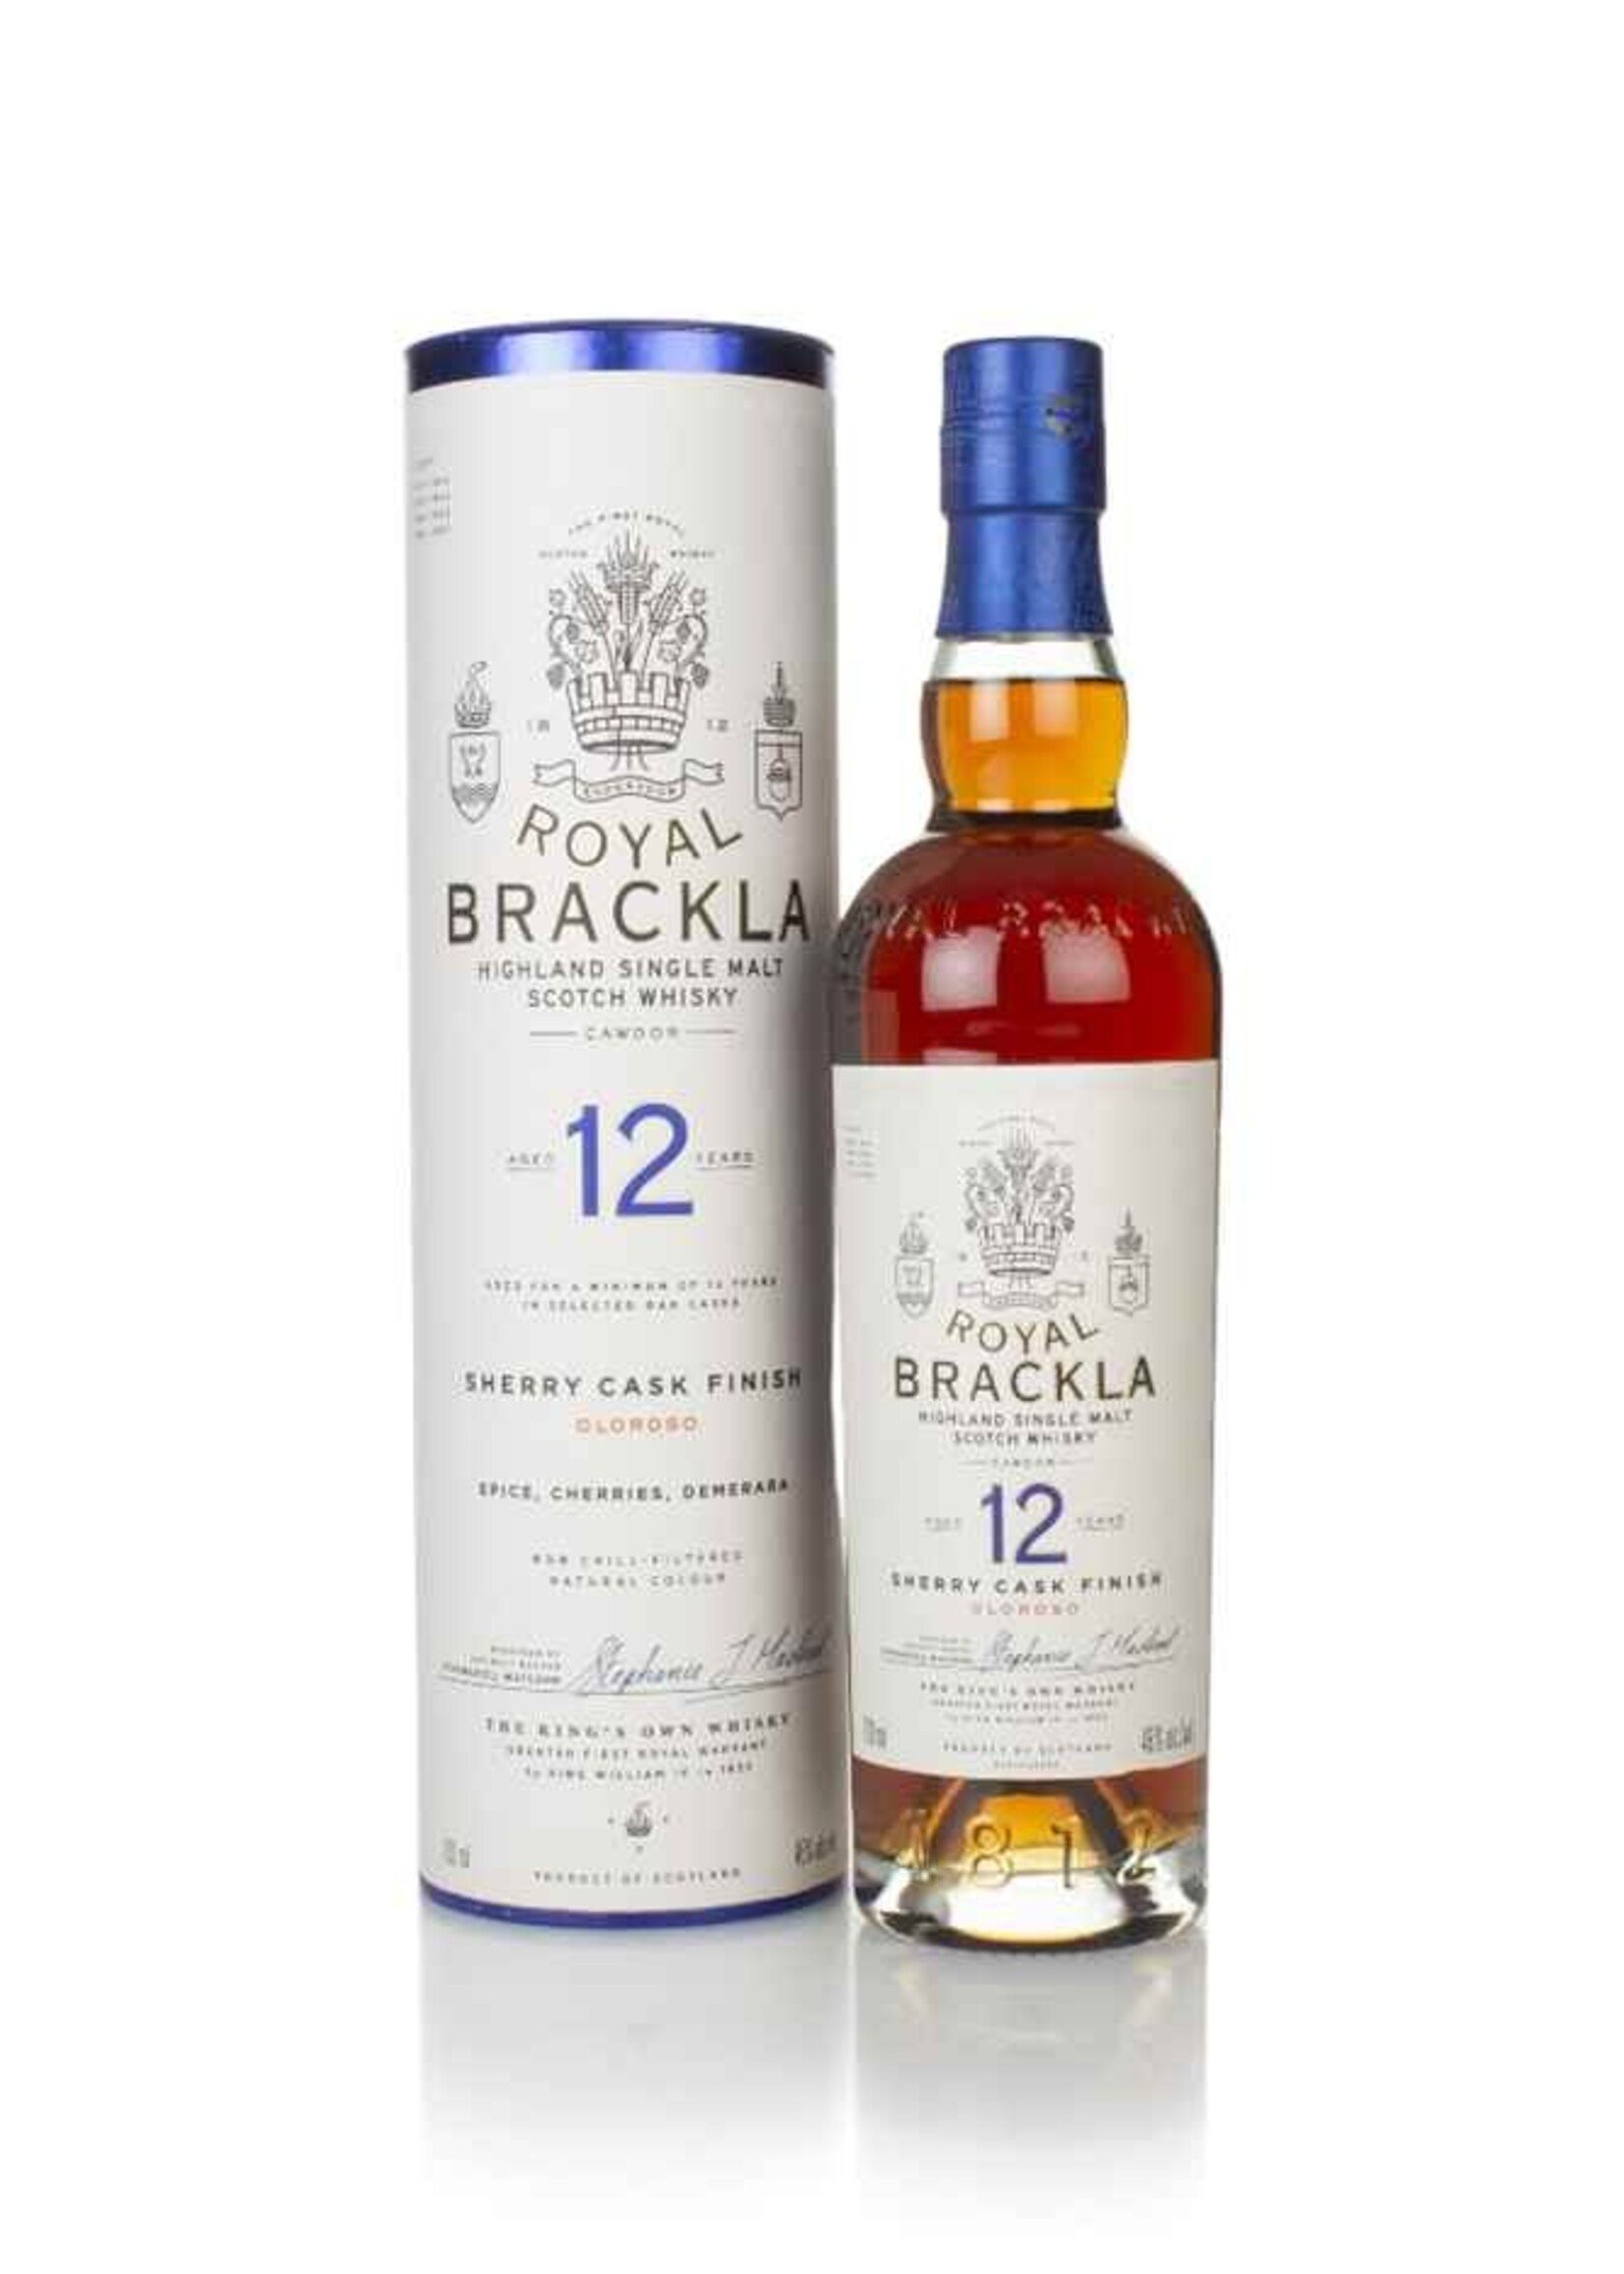 Royal Brackla Royal Brackla / 12 Year Oloroso Sherry Cask Finish Single Malt Scotch Whisky 46% abv / 750mL